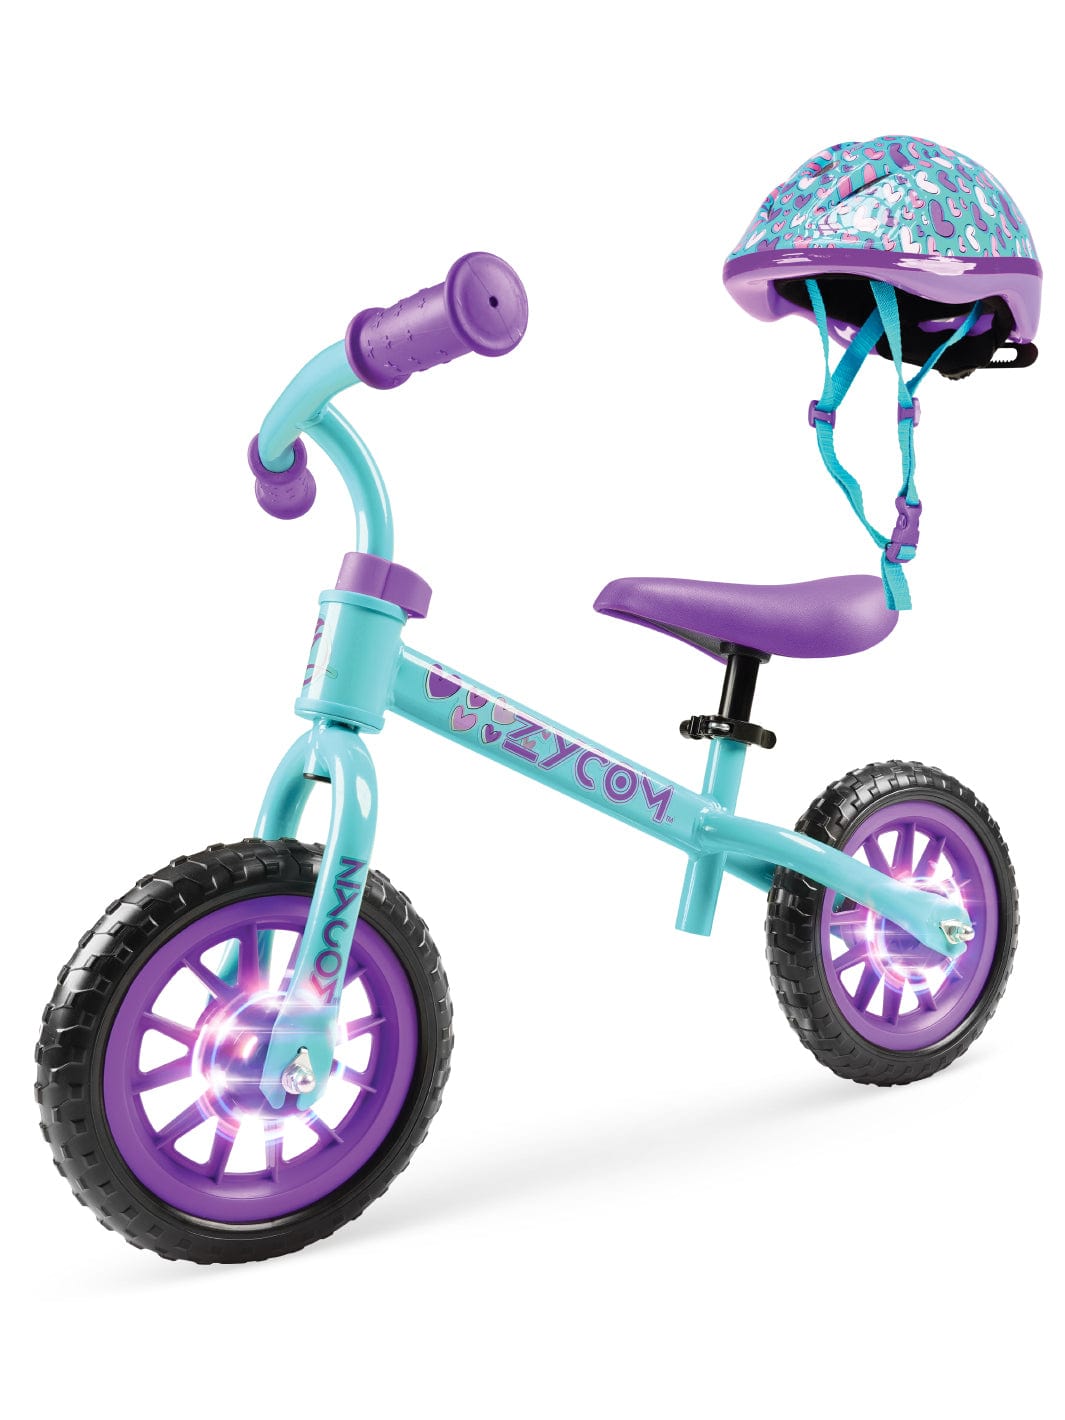 Zycom Light-Up Zbike & Helmet - Teal Purple - Madd Gear Global | Est 2002